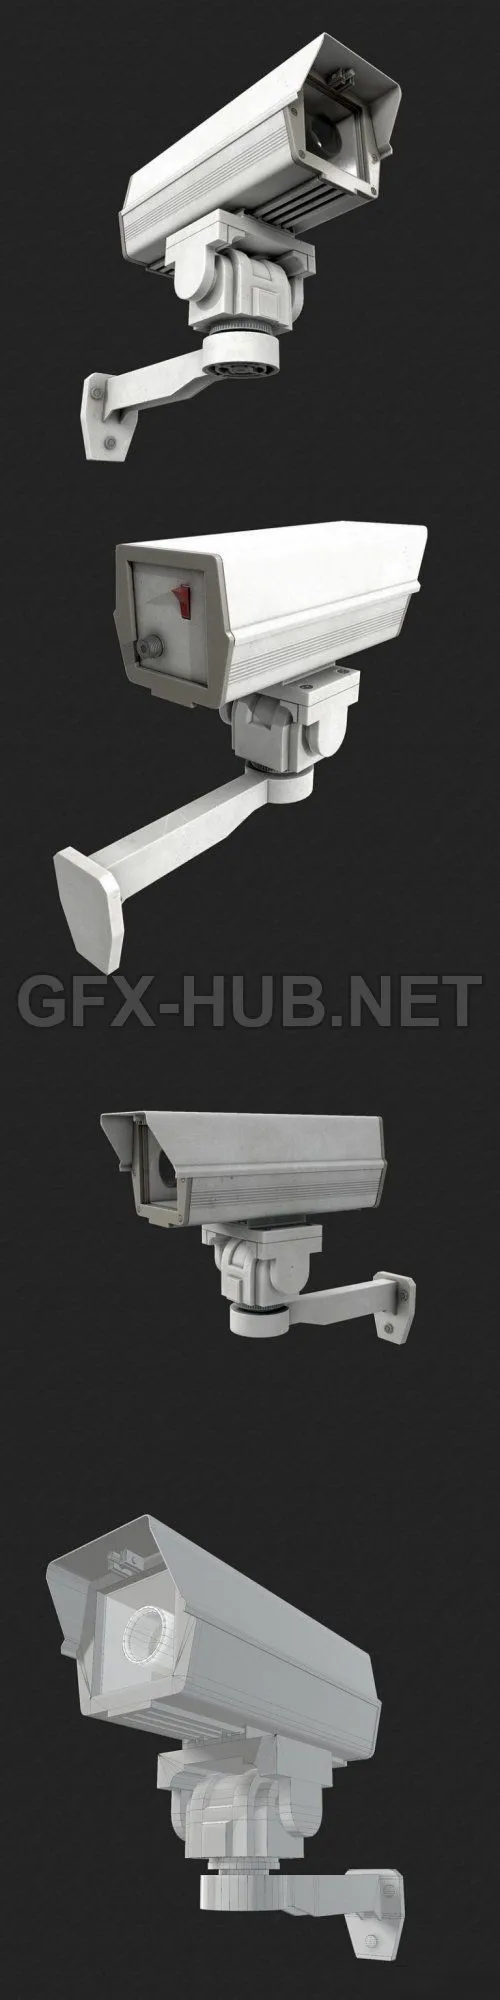 PBR Game 3D Model – CCTV Camera